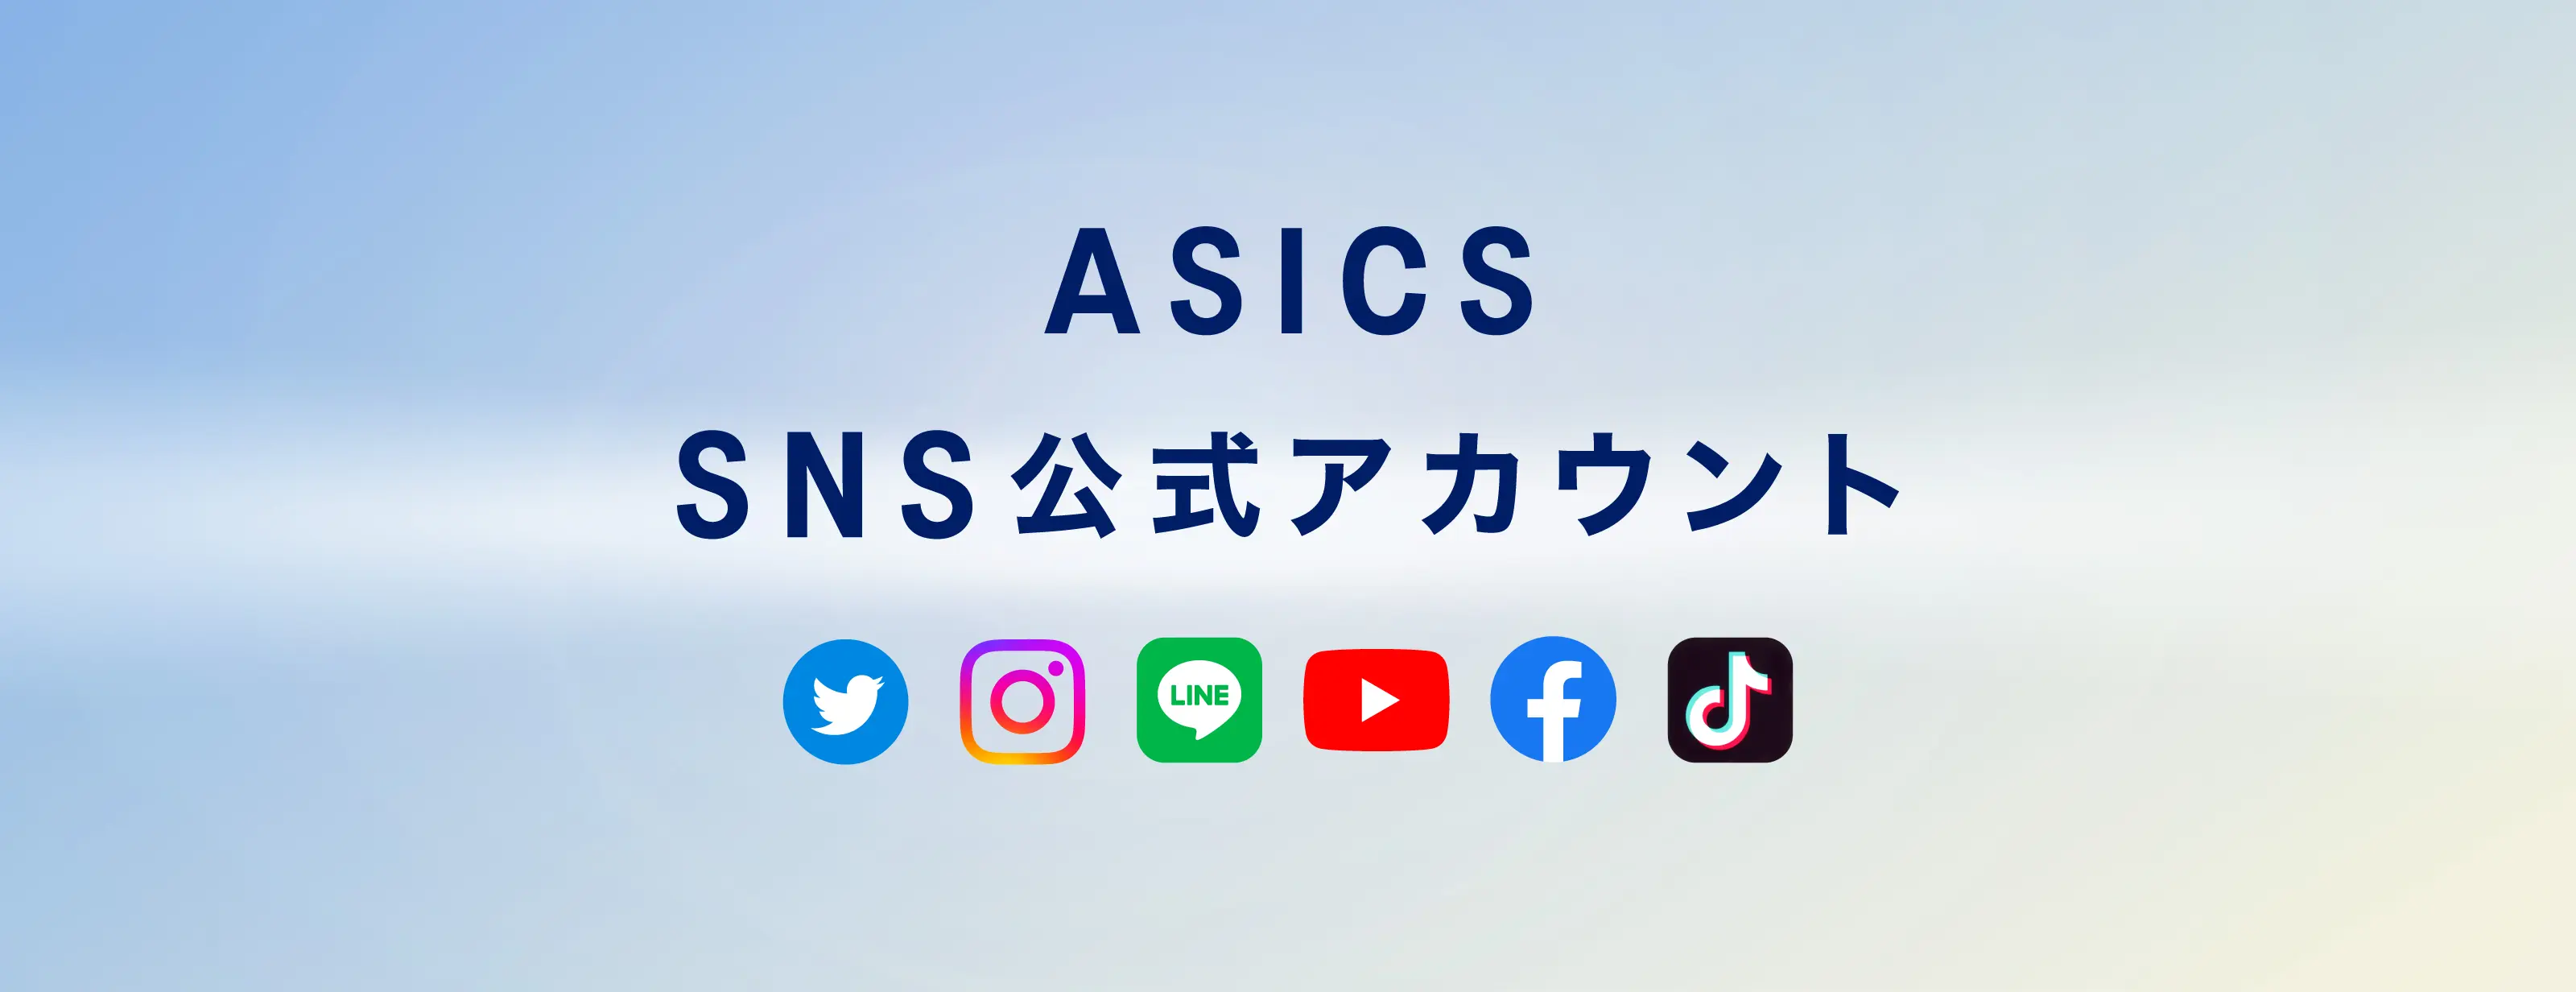 ASICS SNS公式アカウント HERO BANNER